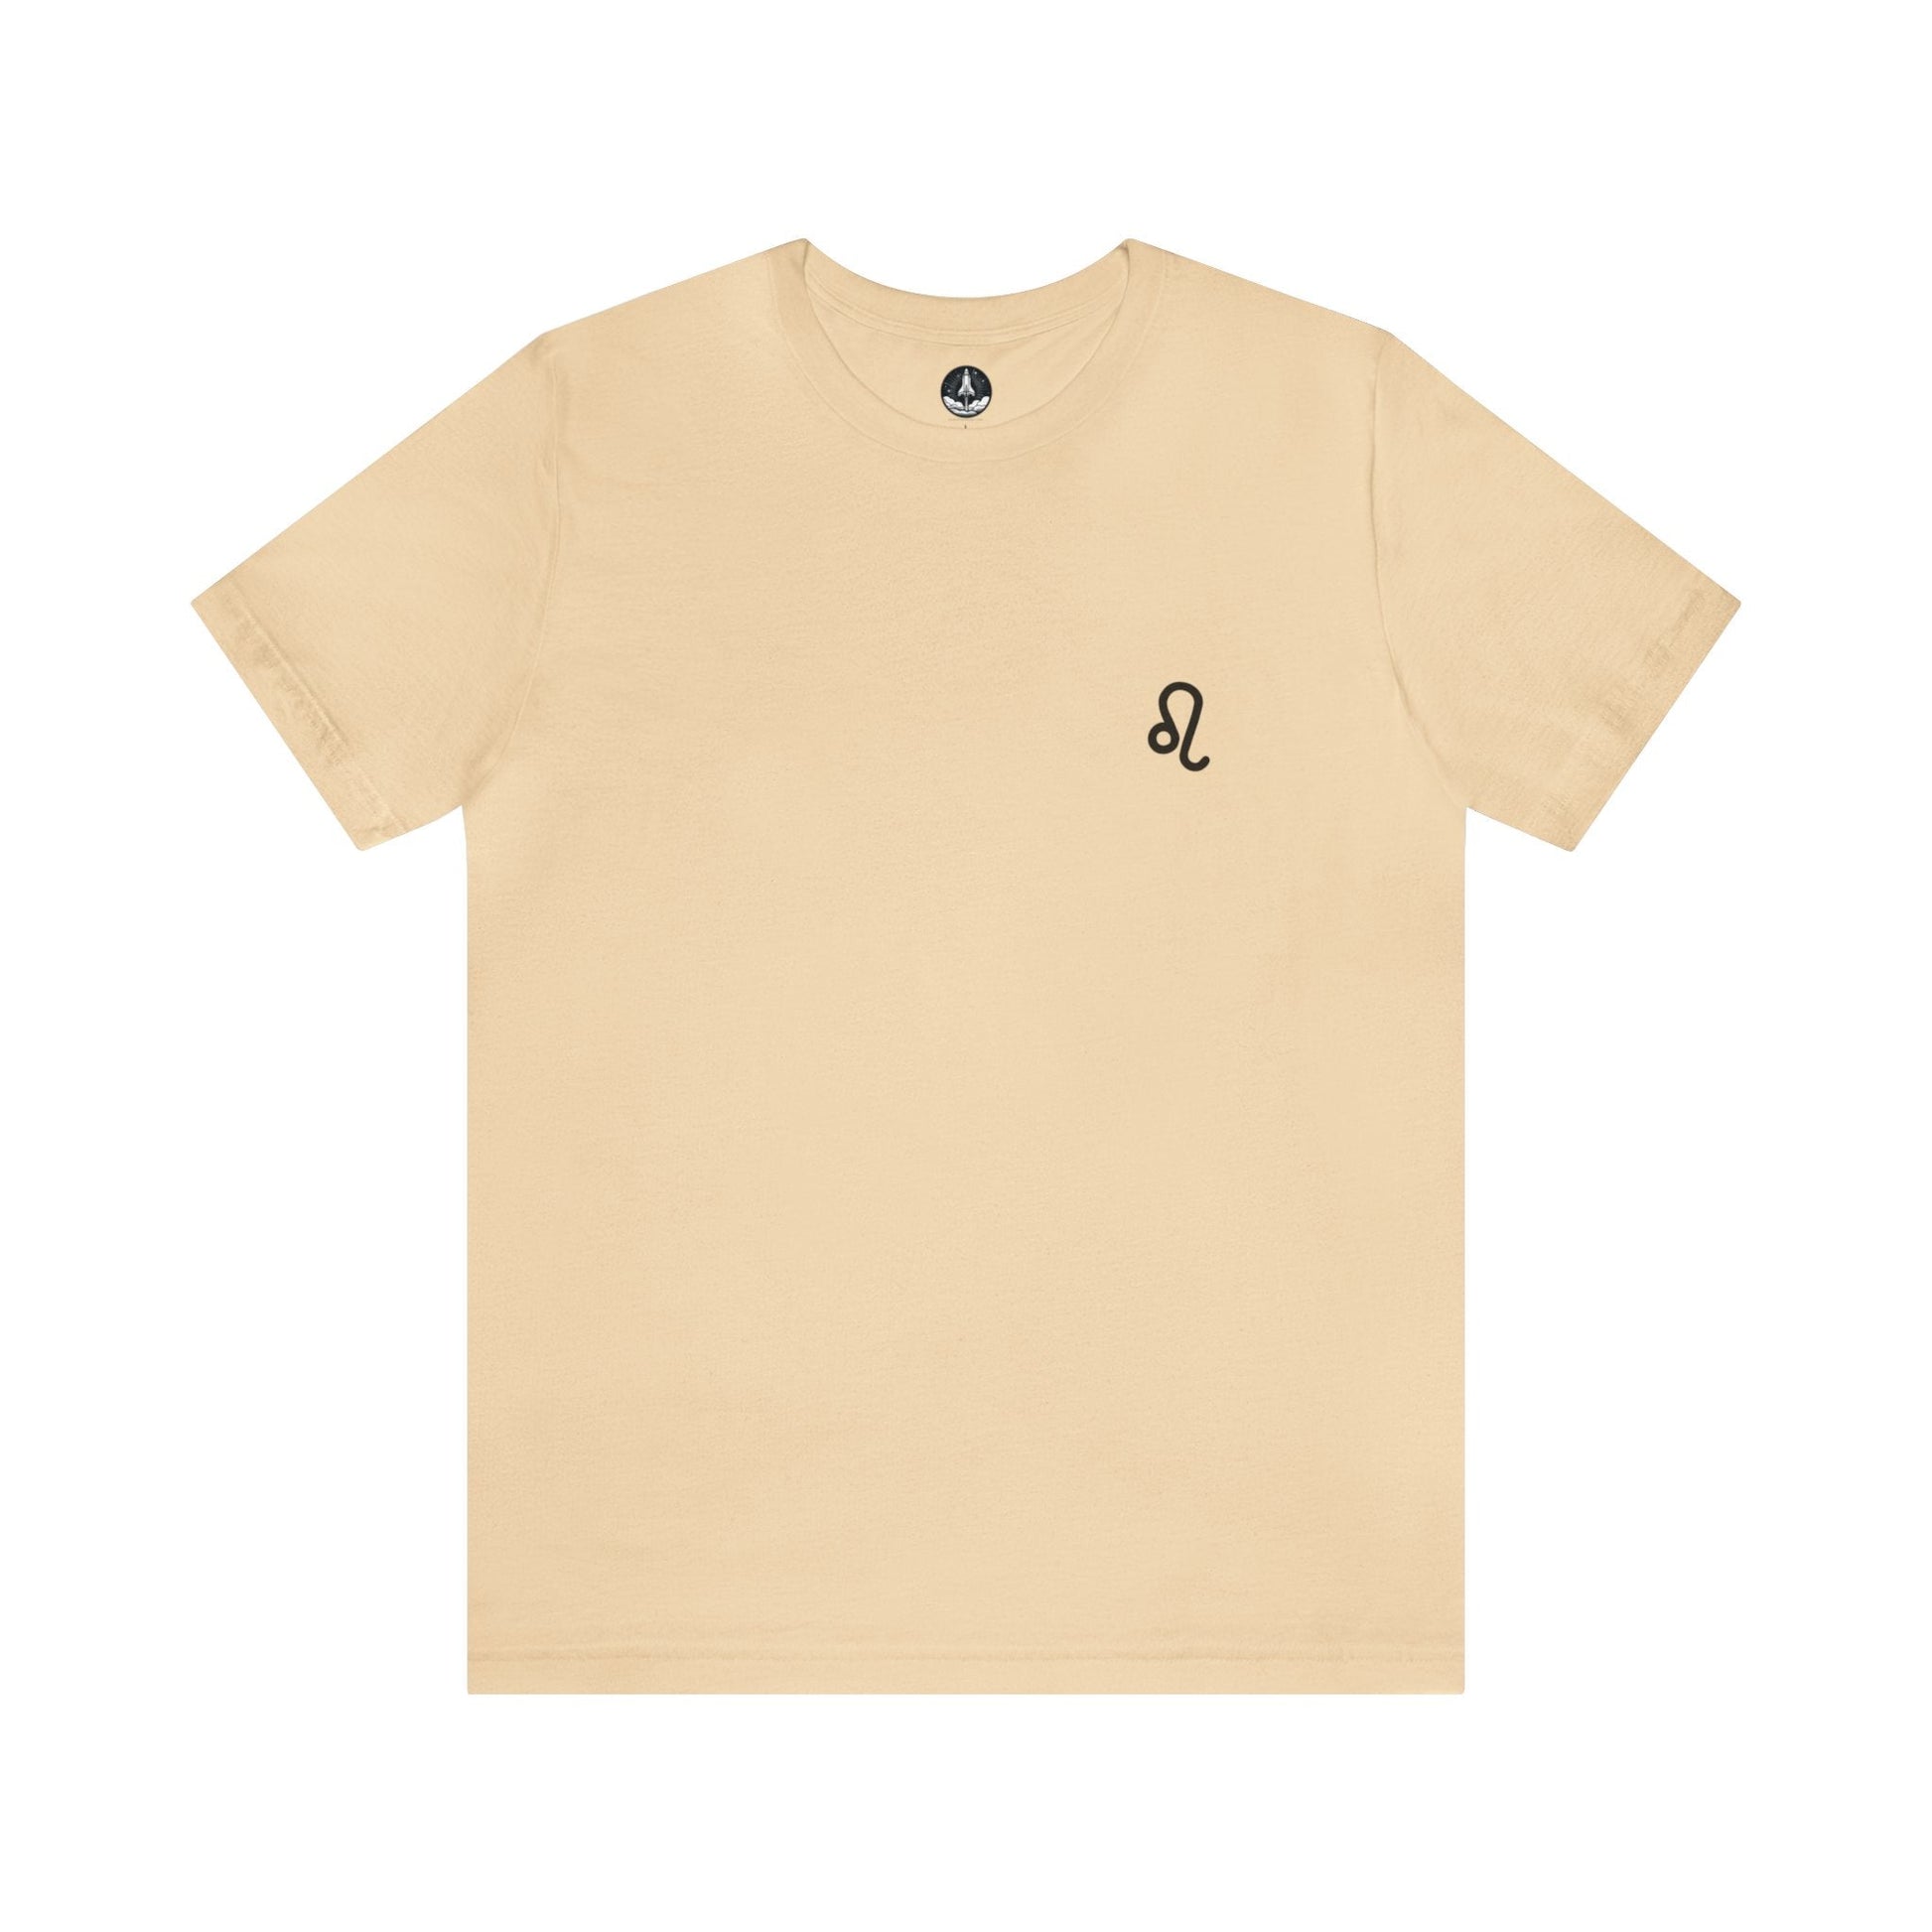 T-Shirt Soft Cream / S Leo Minimalist Majesty T-Shirt: Bold Elegance for the Zodiac King